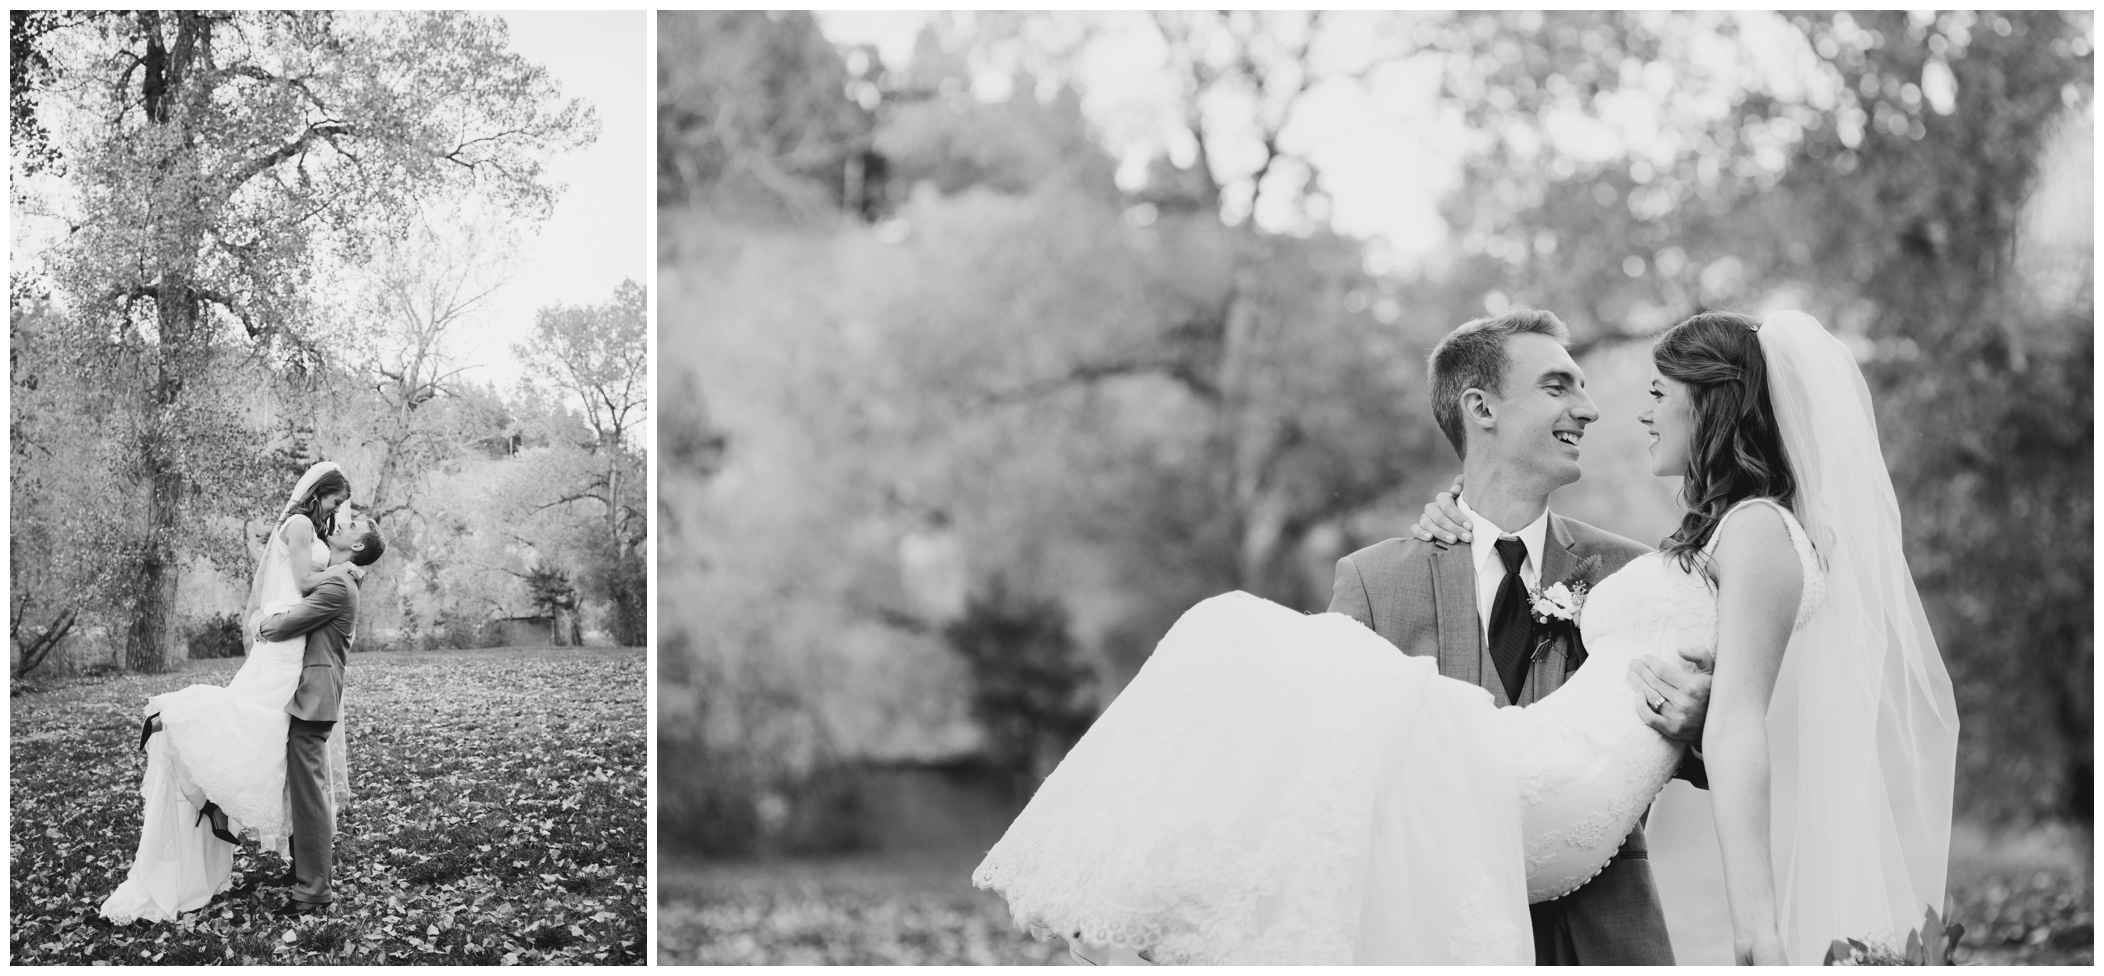 Colorado wedding photography inspiration